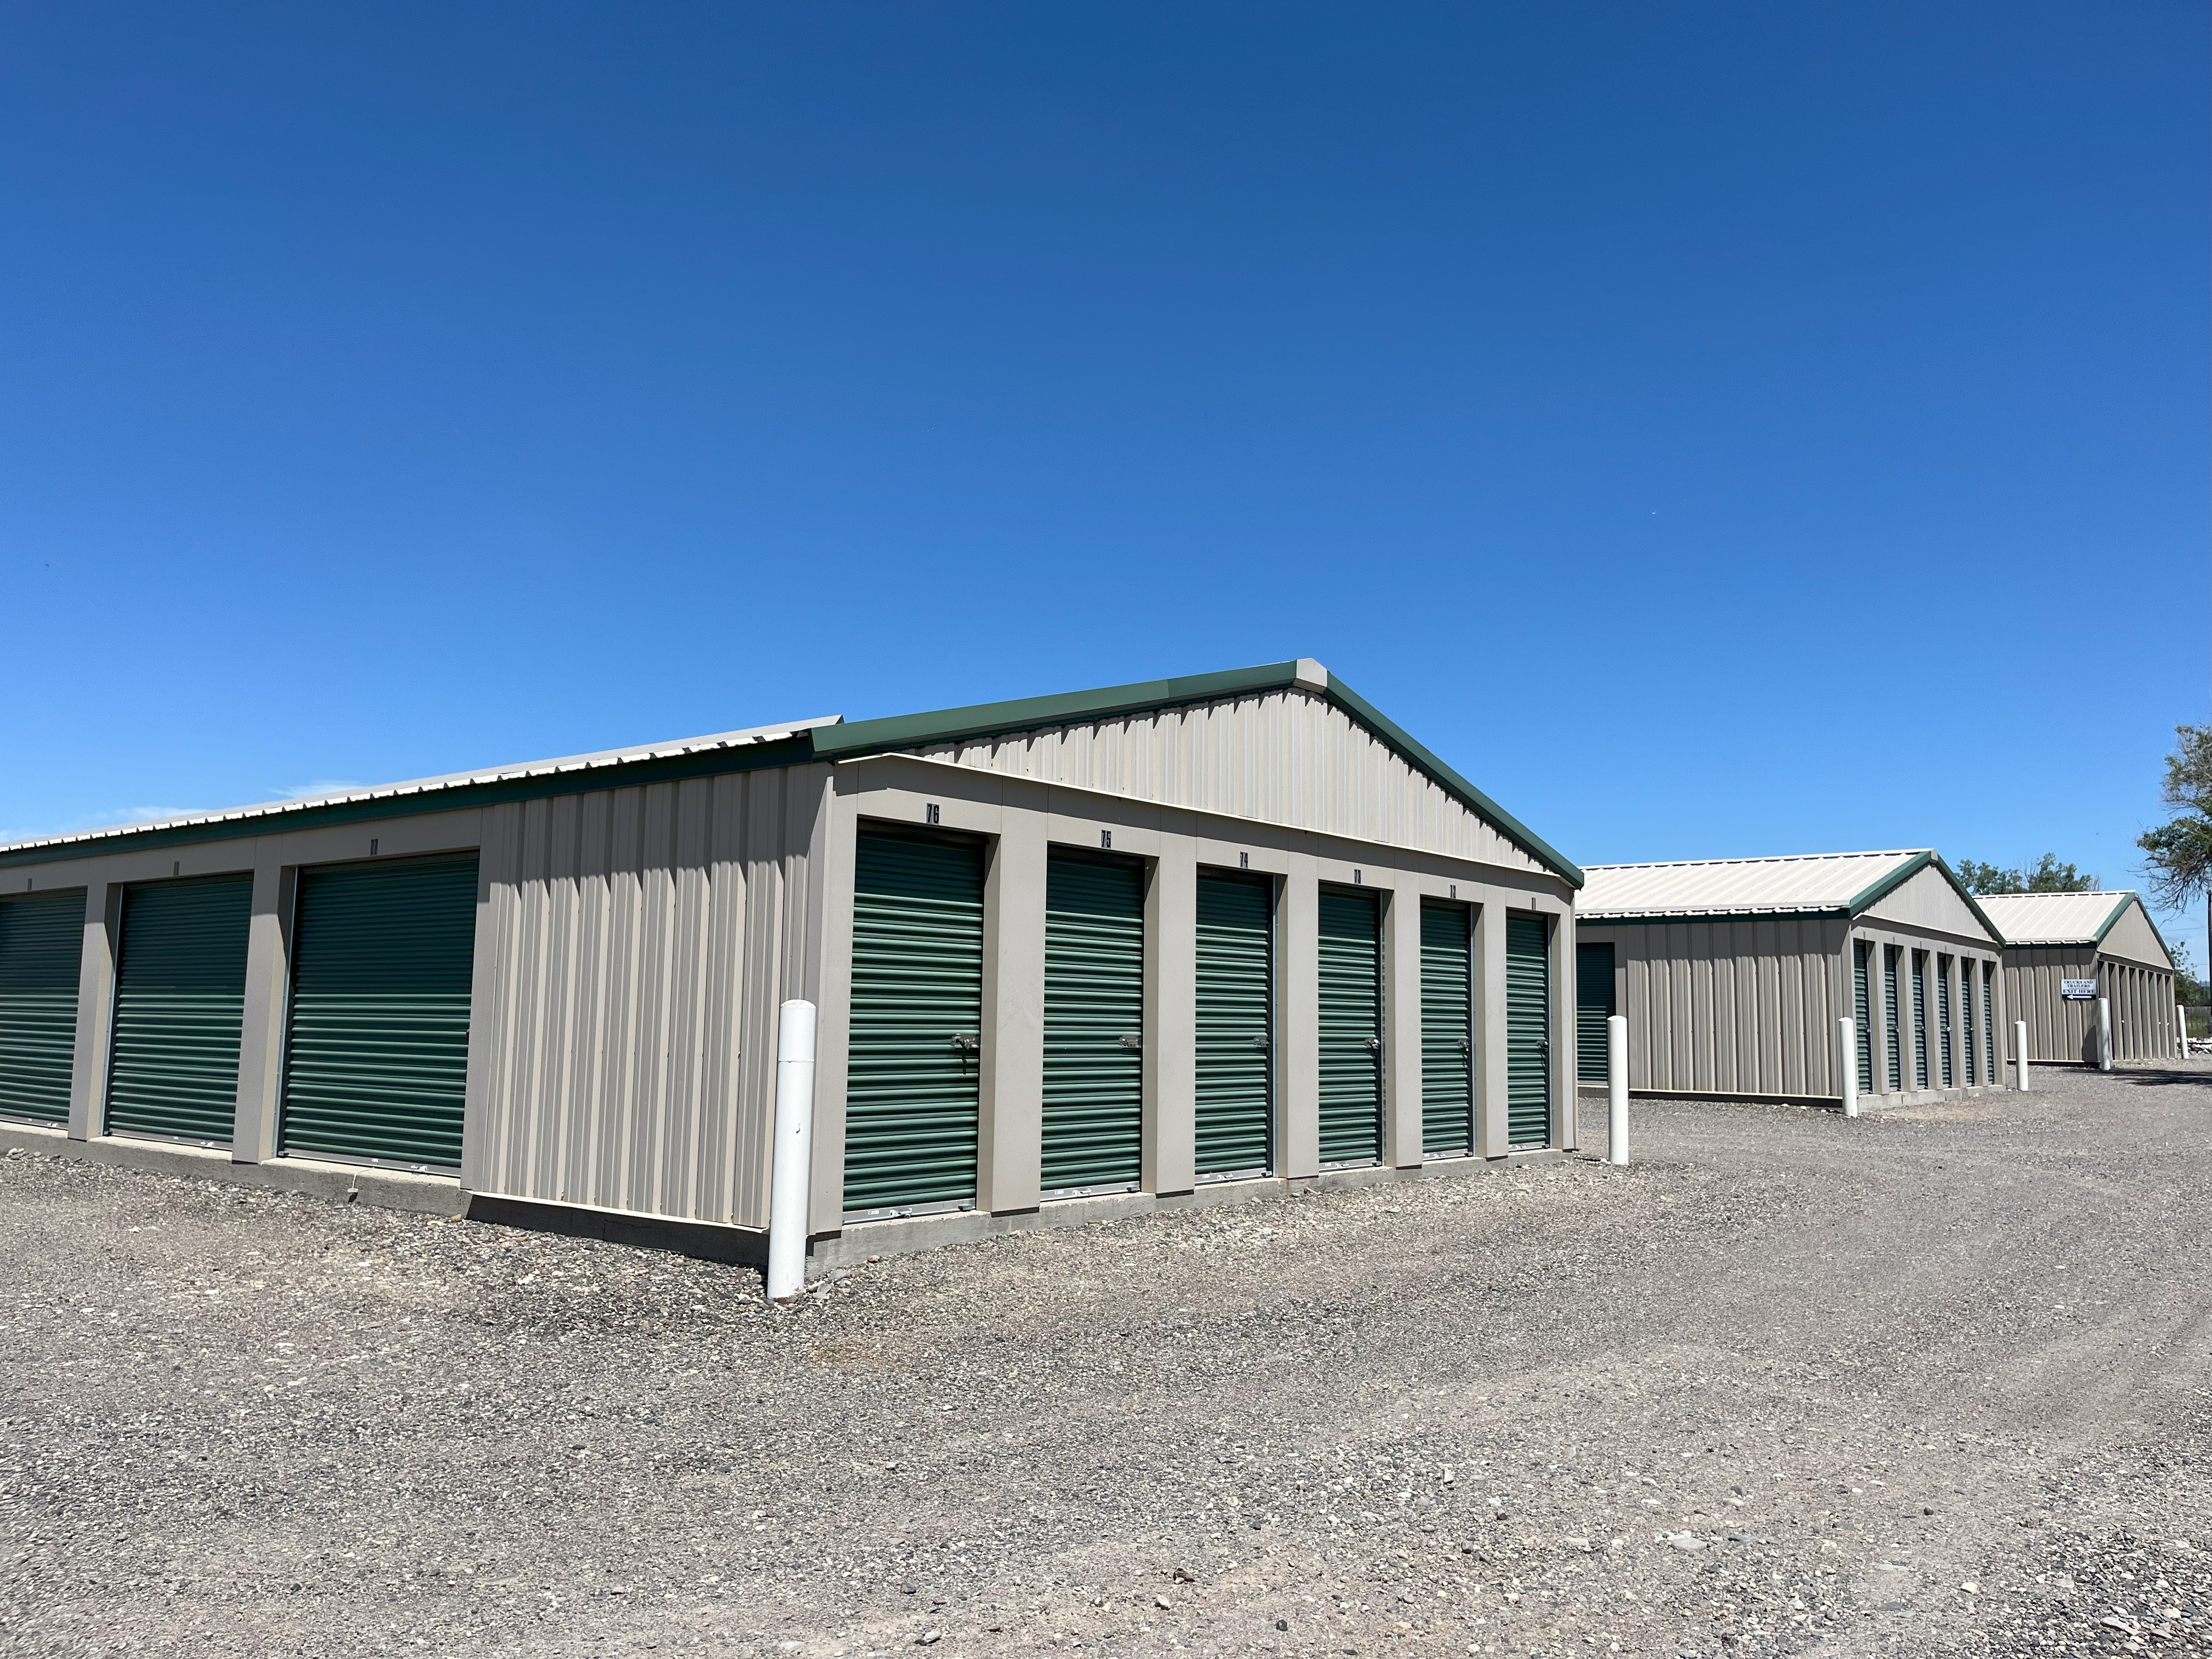 Green rollup doors tan storage building